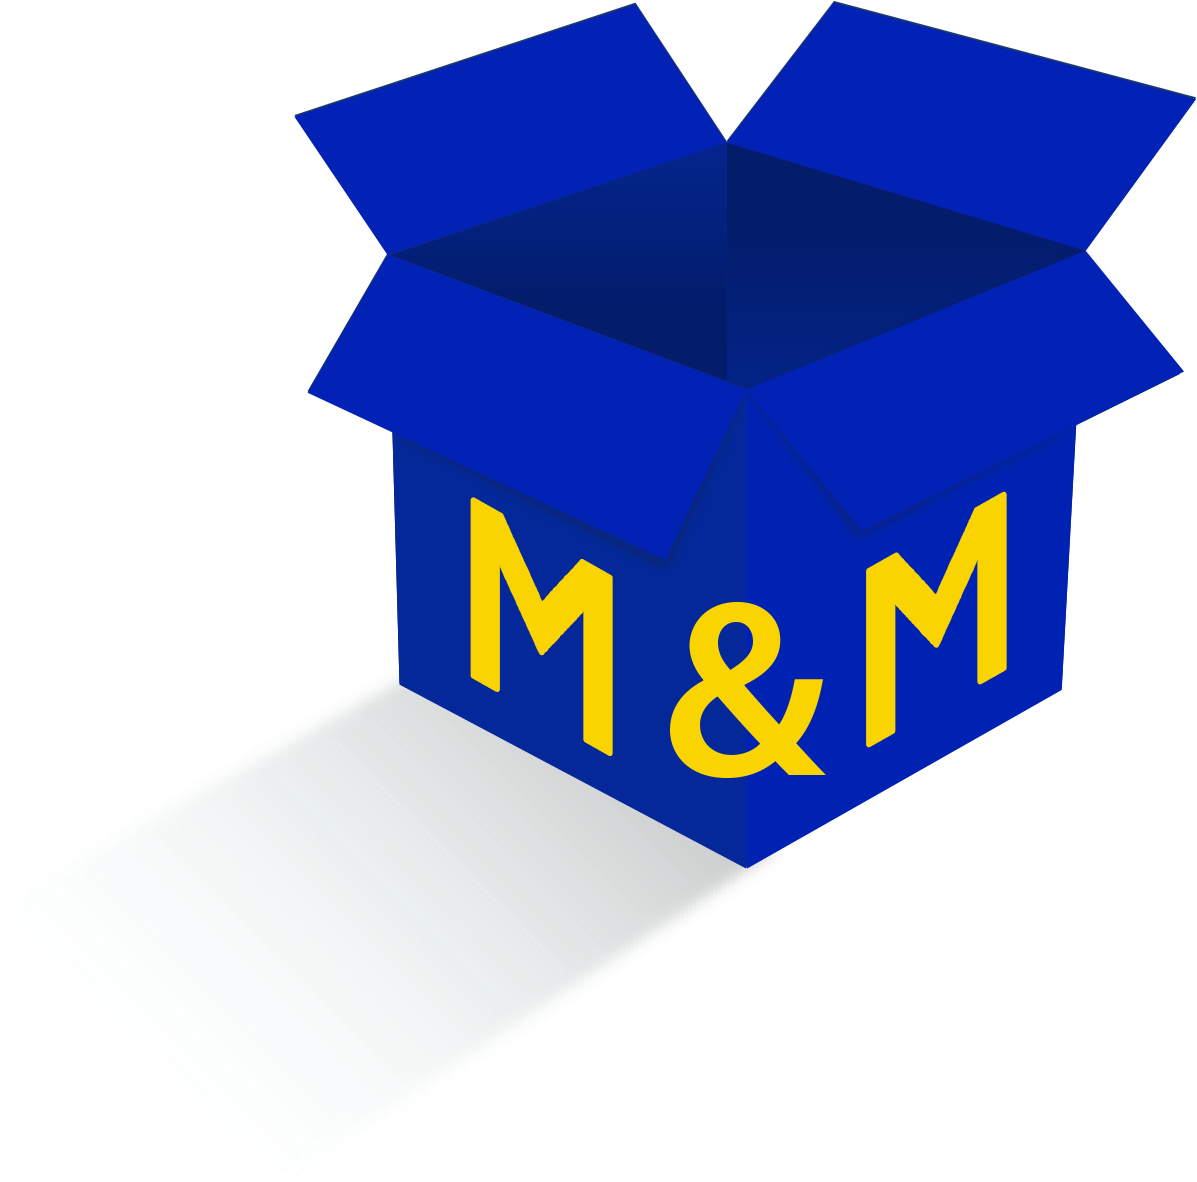 M&m - B&b Tools (1508x1391)